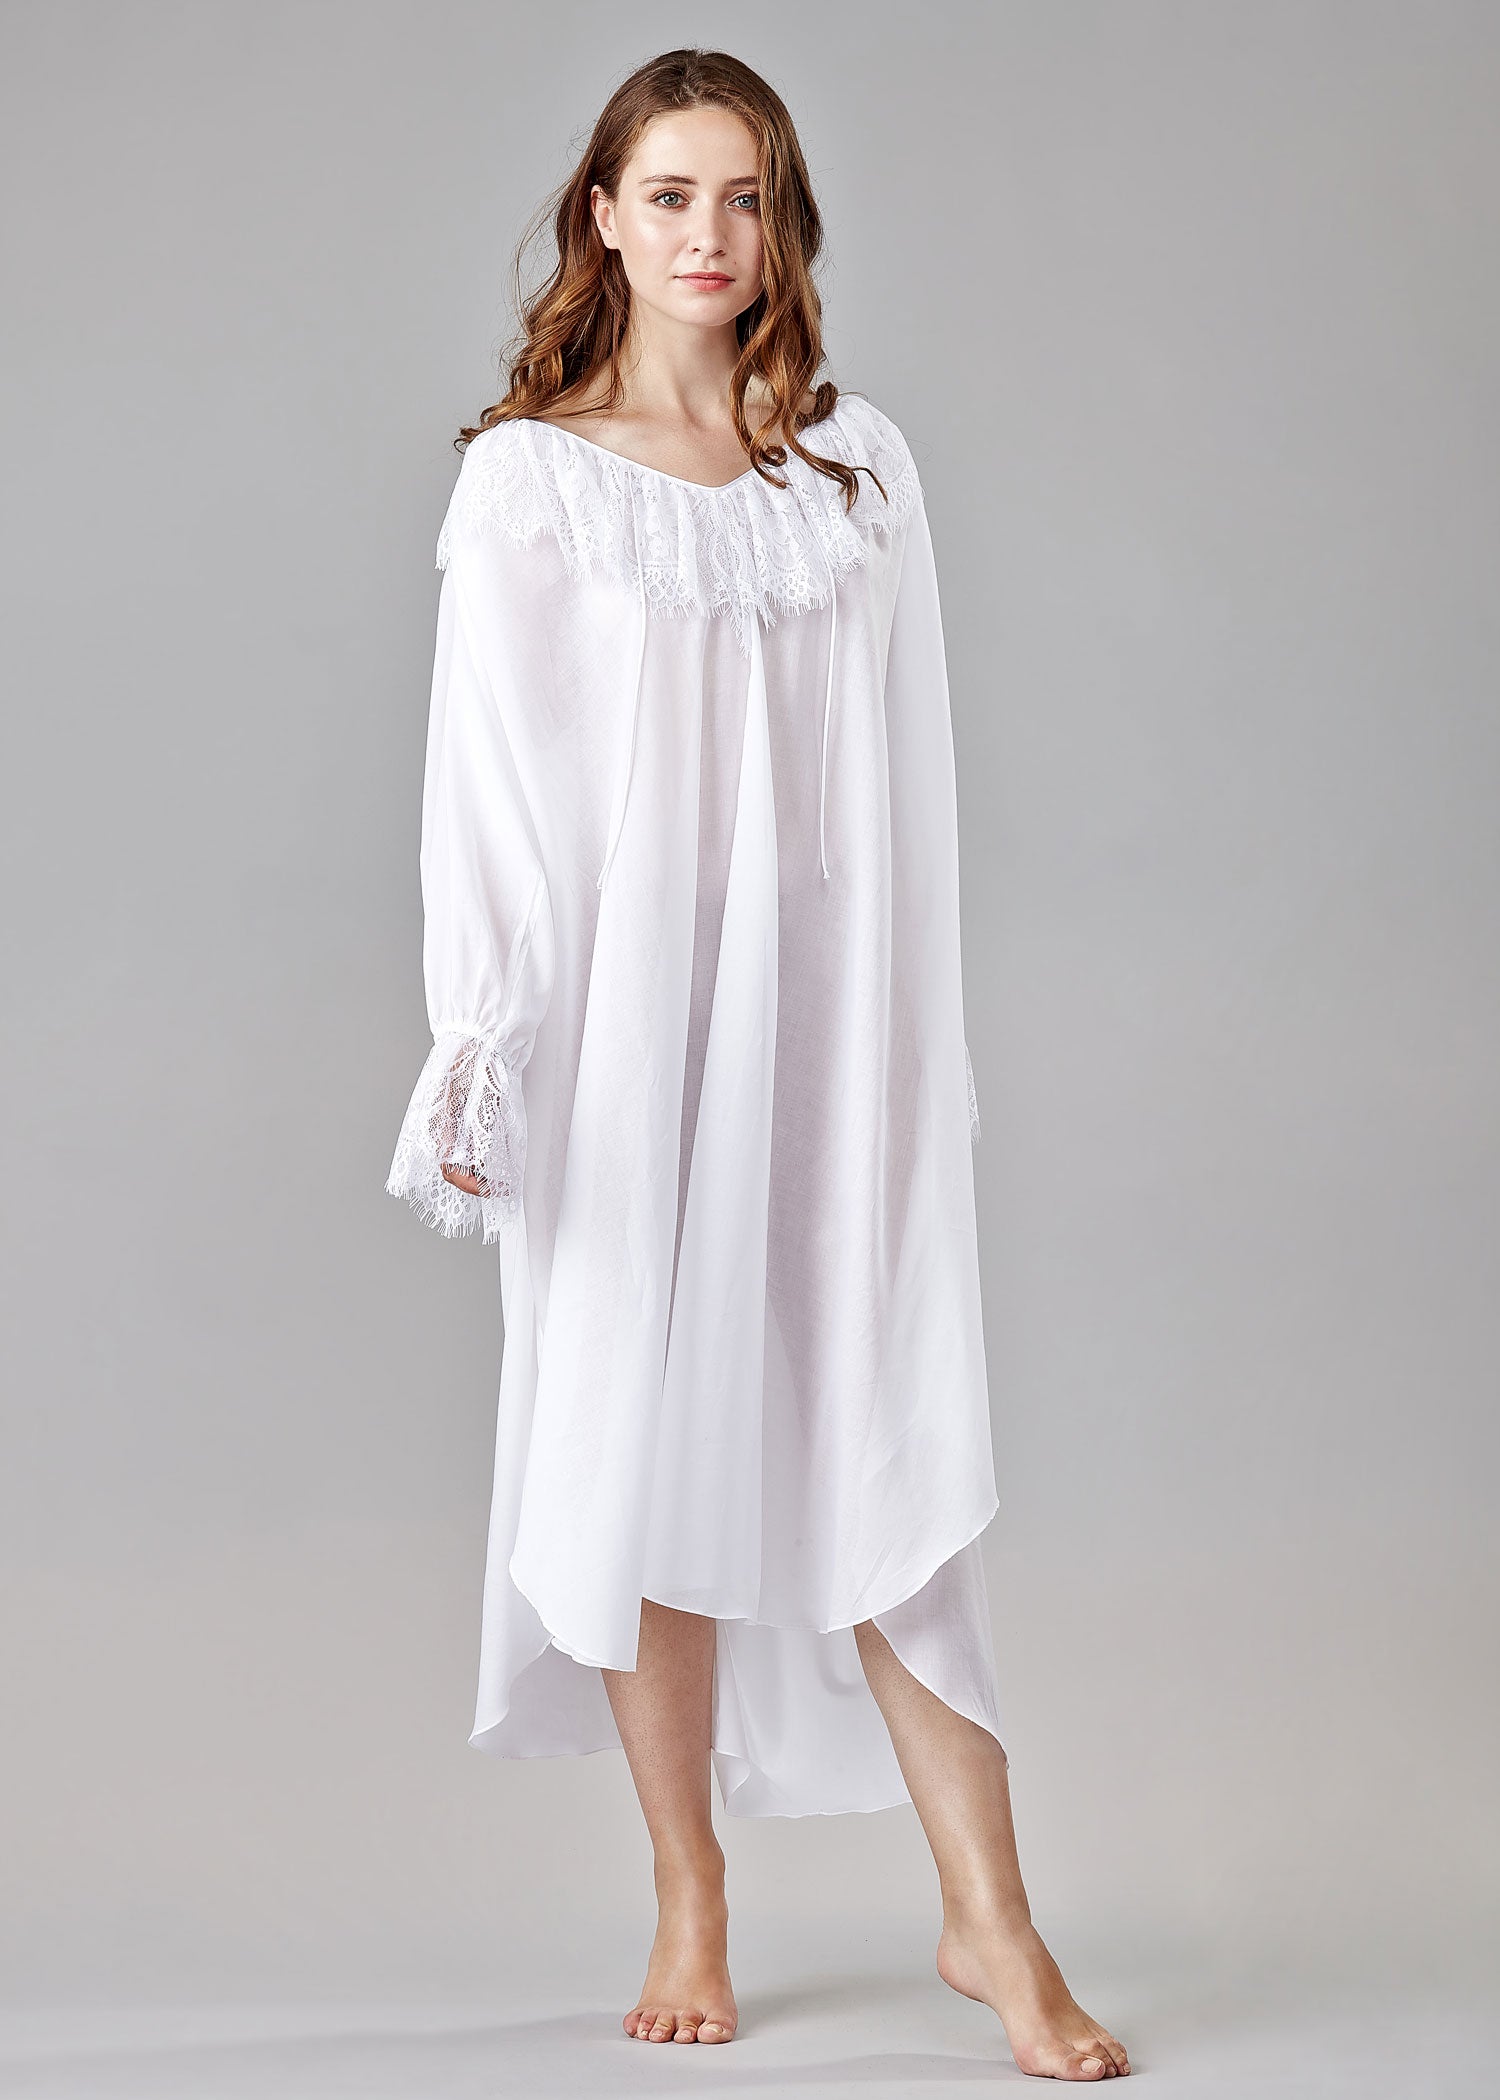 Priamo: US Made Luxury Nightgowns, Robes, & Pajamas for Women & Men ...